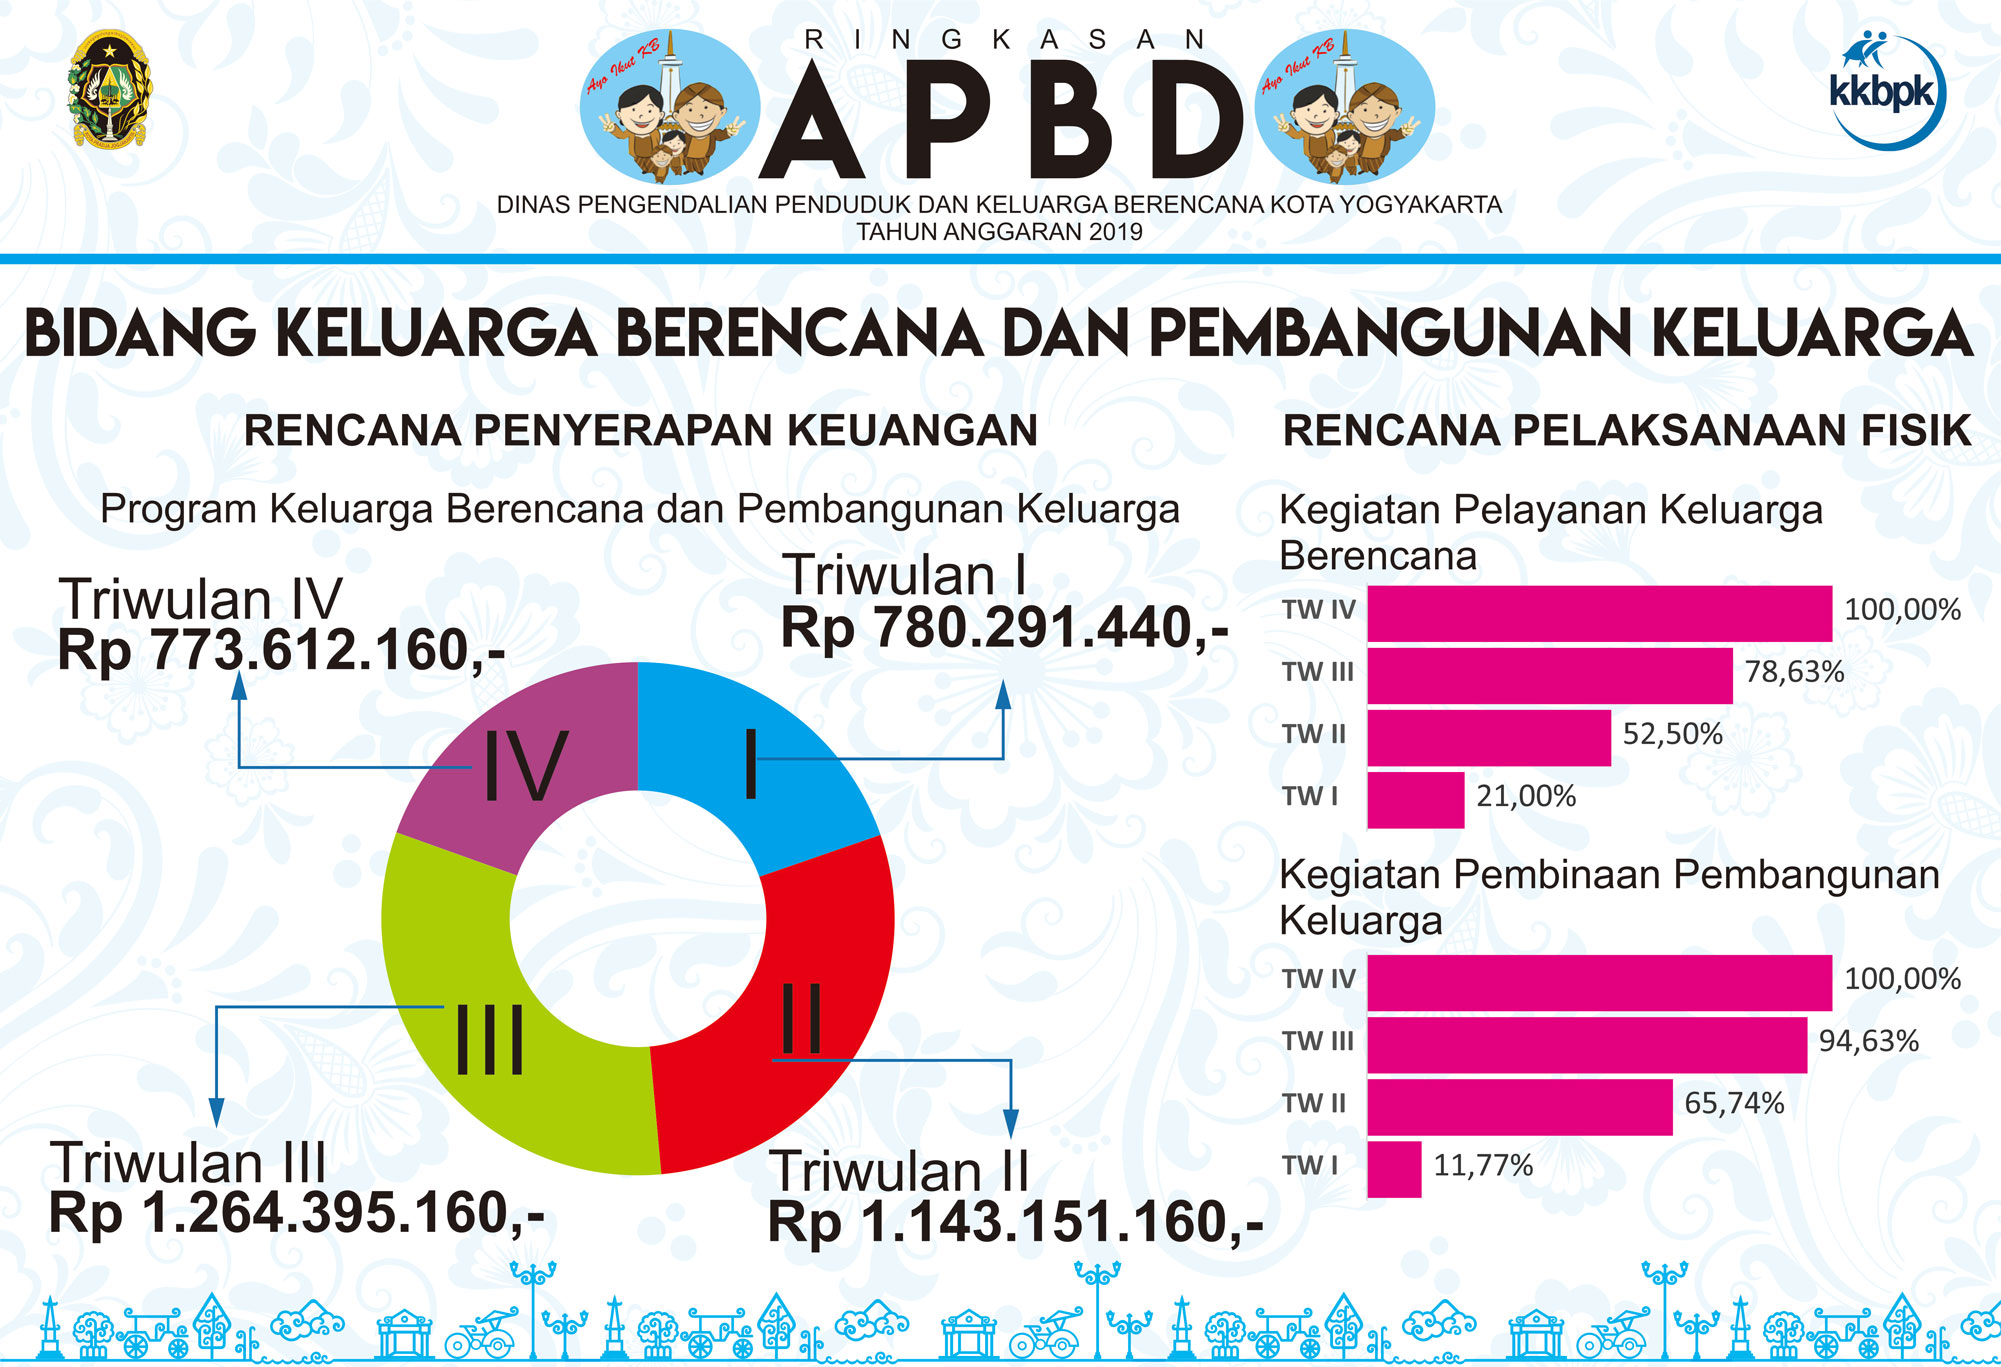 Ringkasan APBD DPPKB Kota Yogyakarta - KBPK